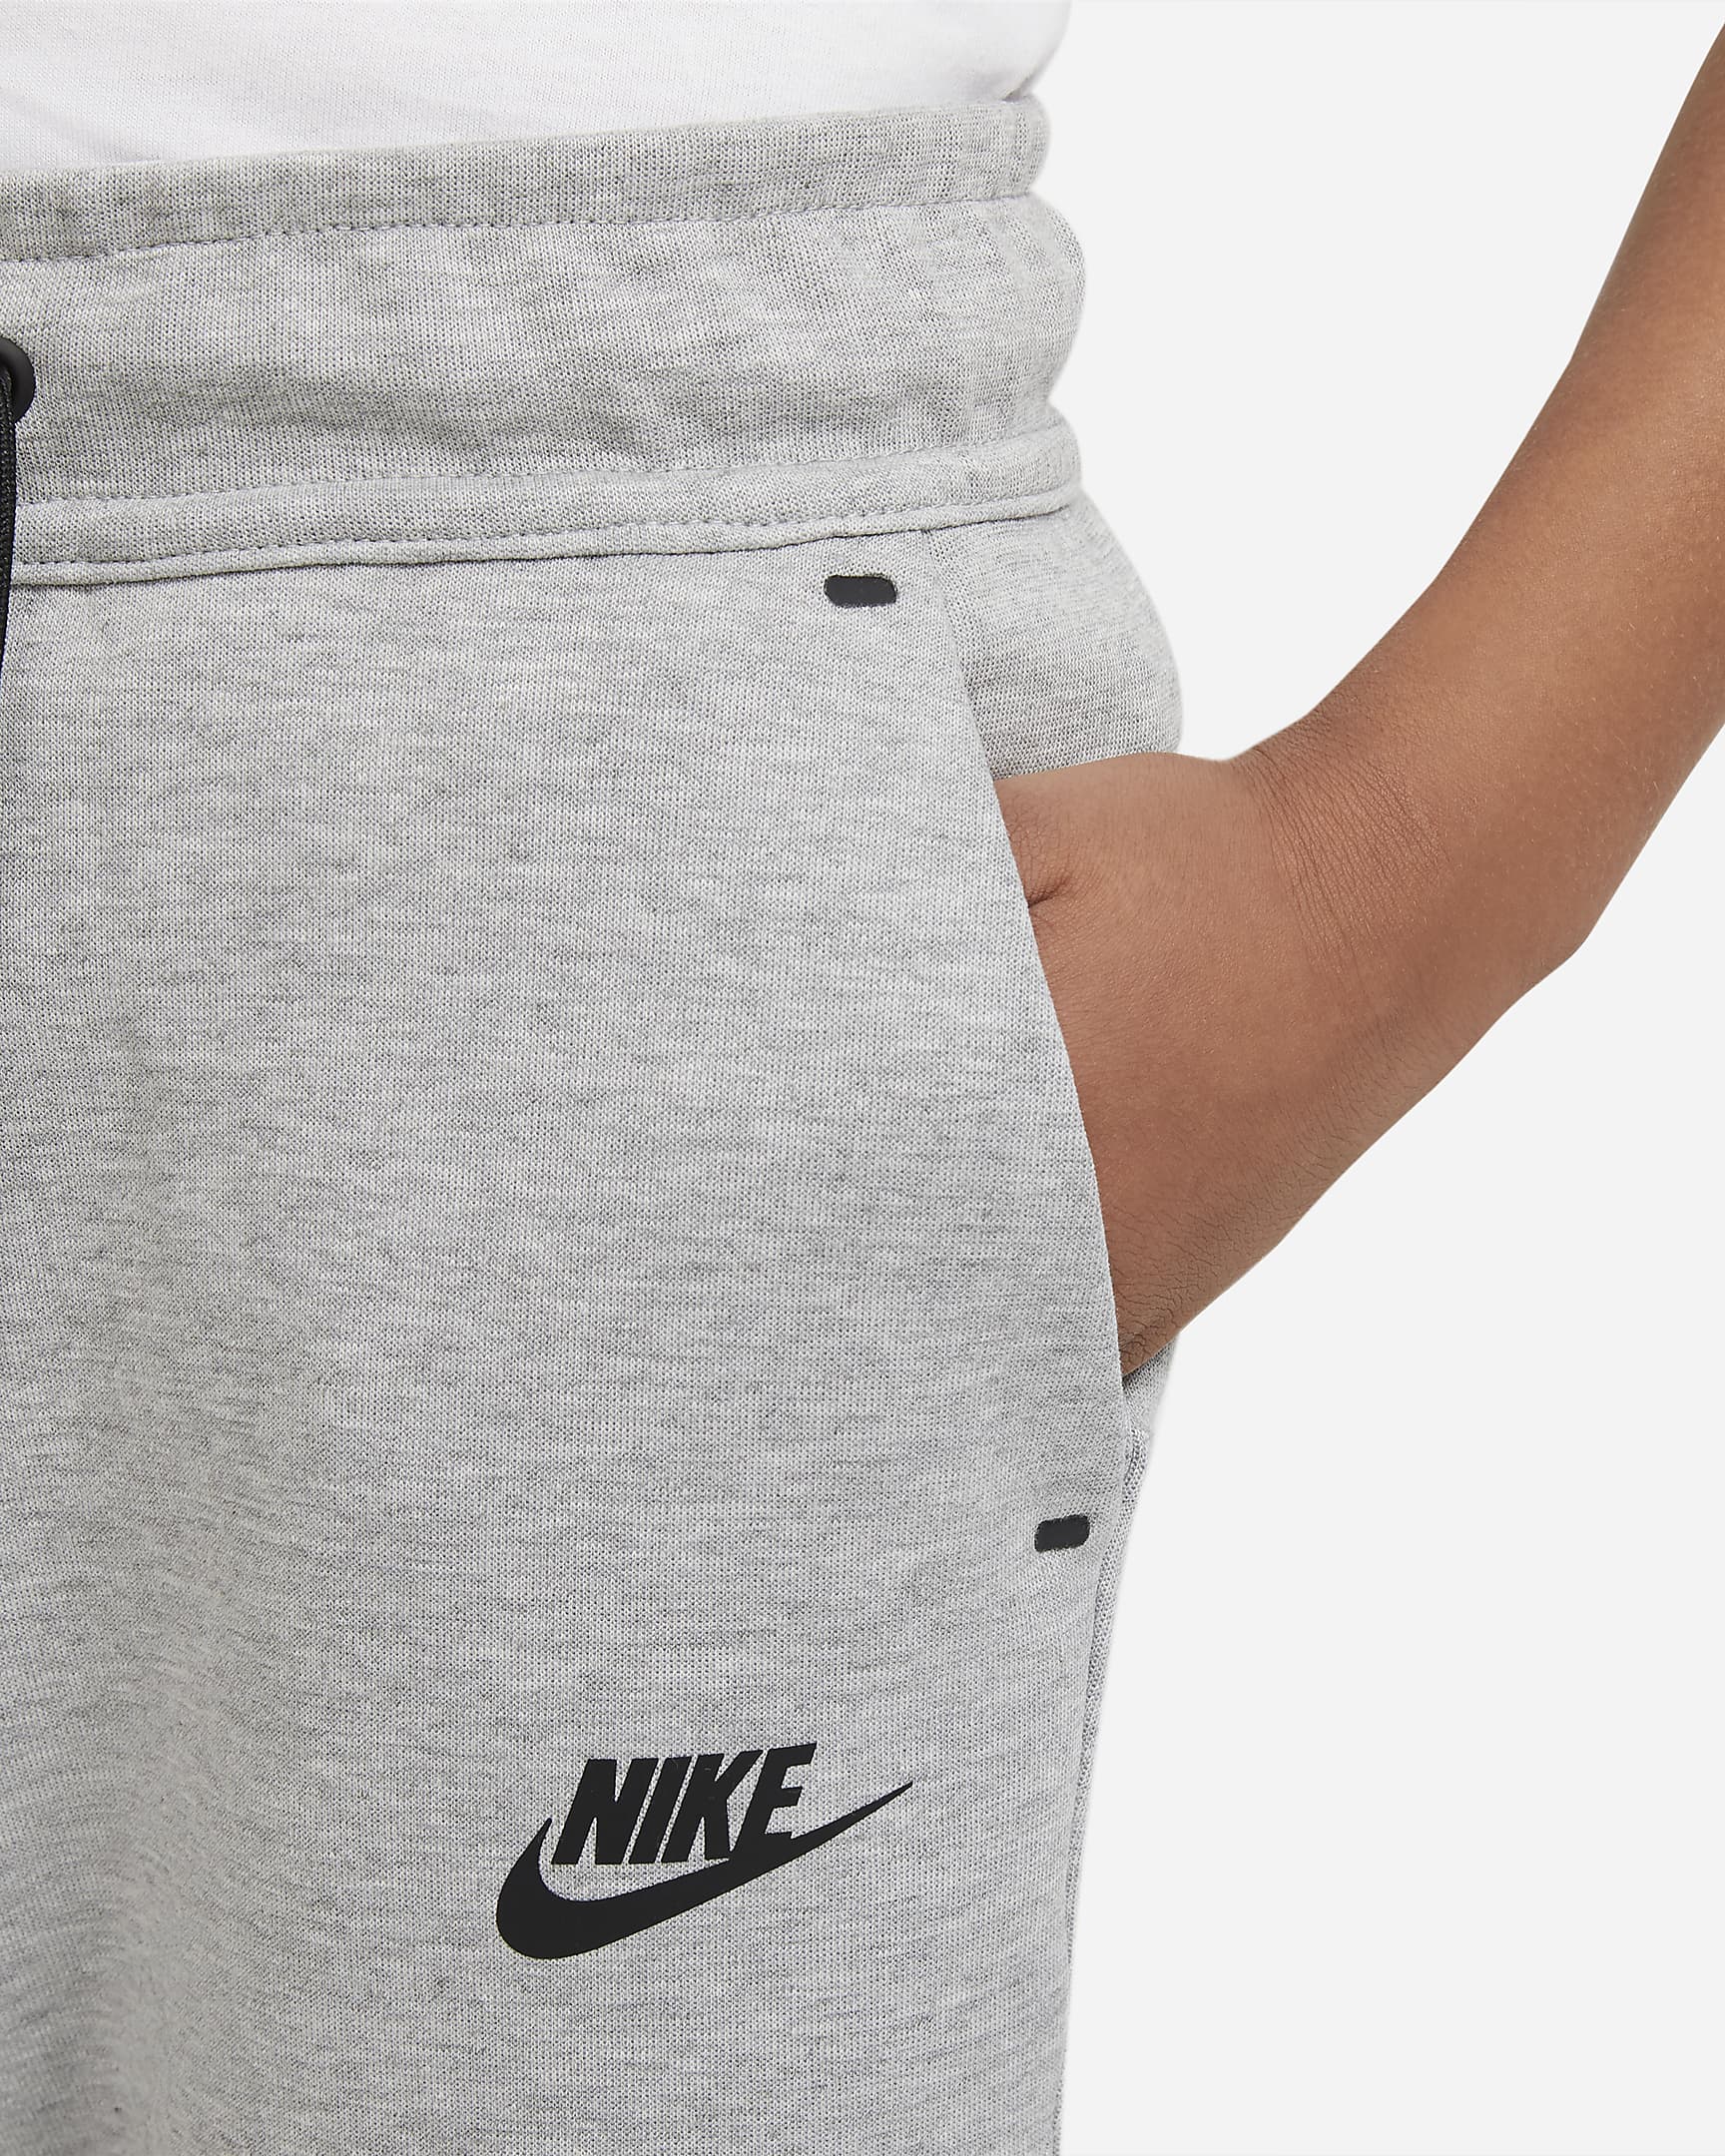 Nike Sportswear Tech Fleece Big Kids (Boys') Pants. Nike.com